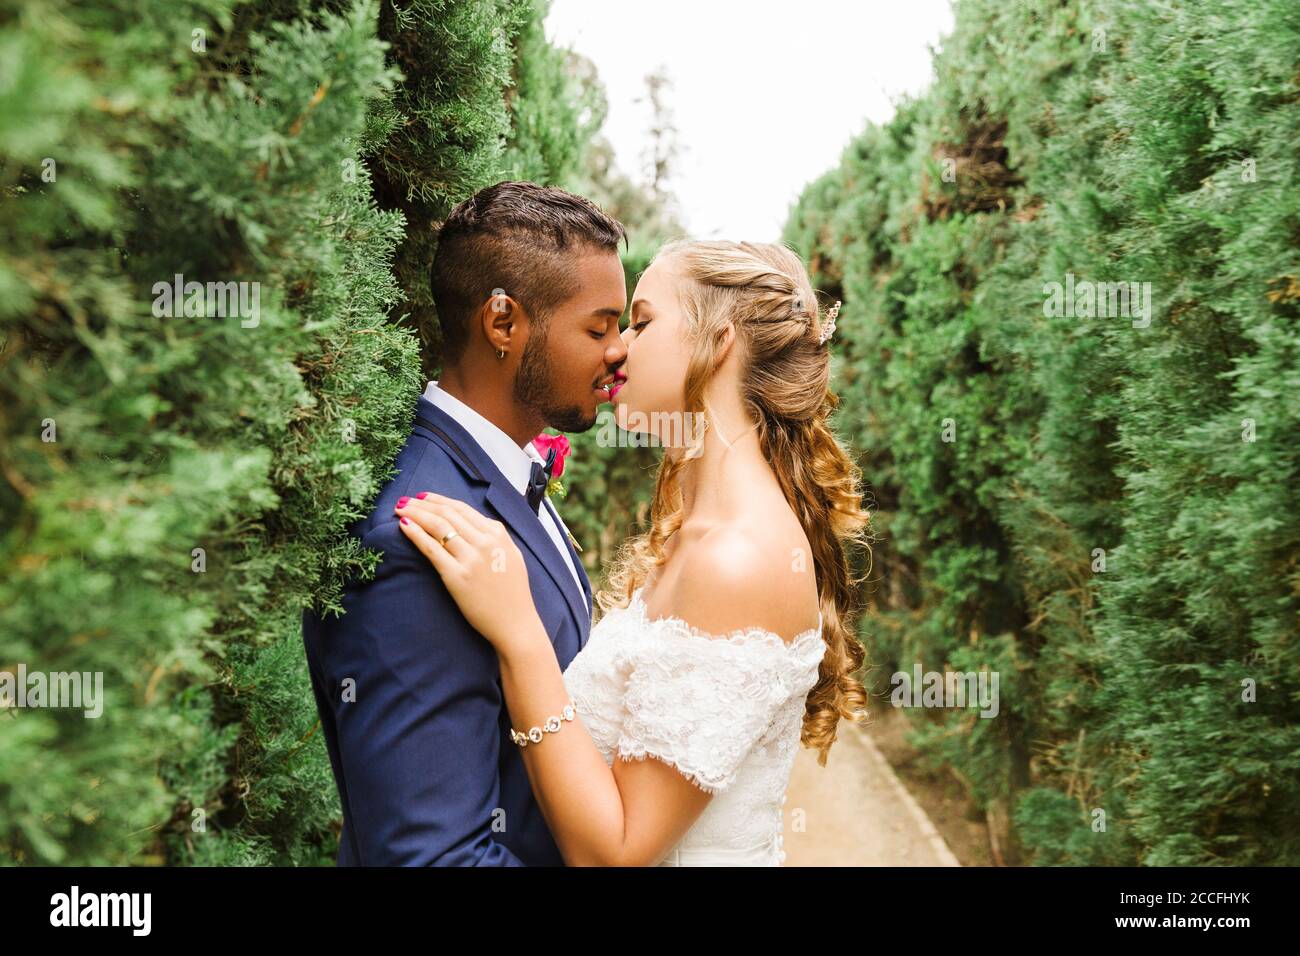 Matrimonio, sposi novelli, giovani adulti, diversità, amore, giardino, siepe, baciare Foto Stock